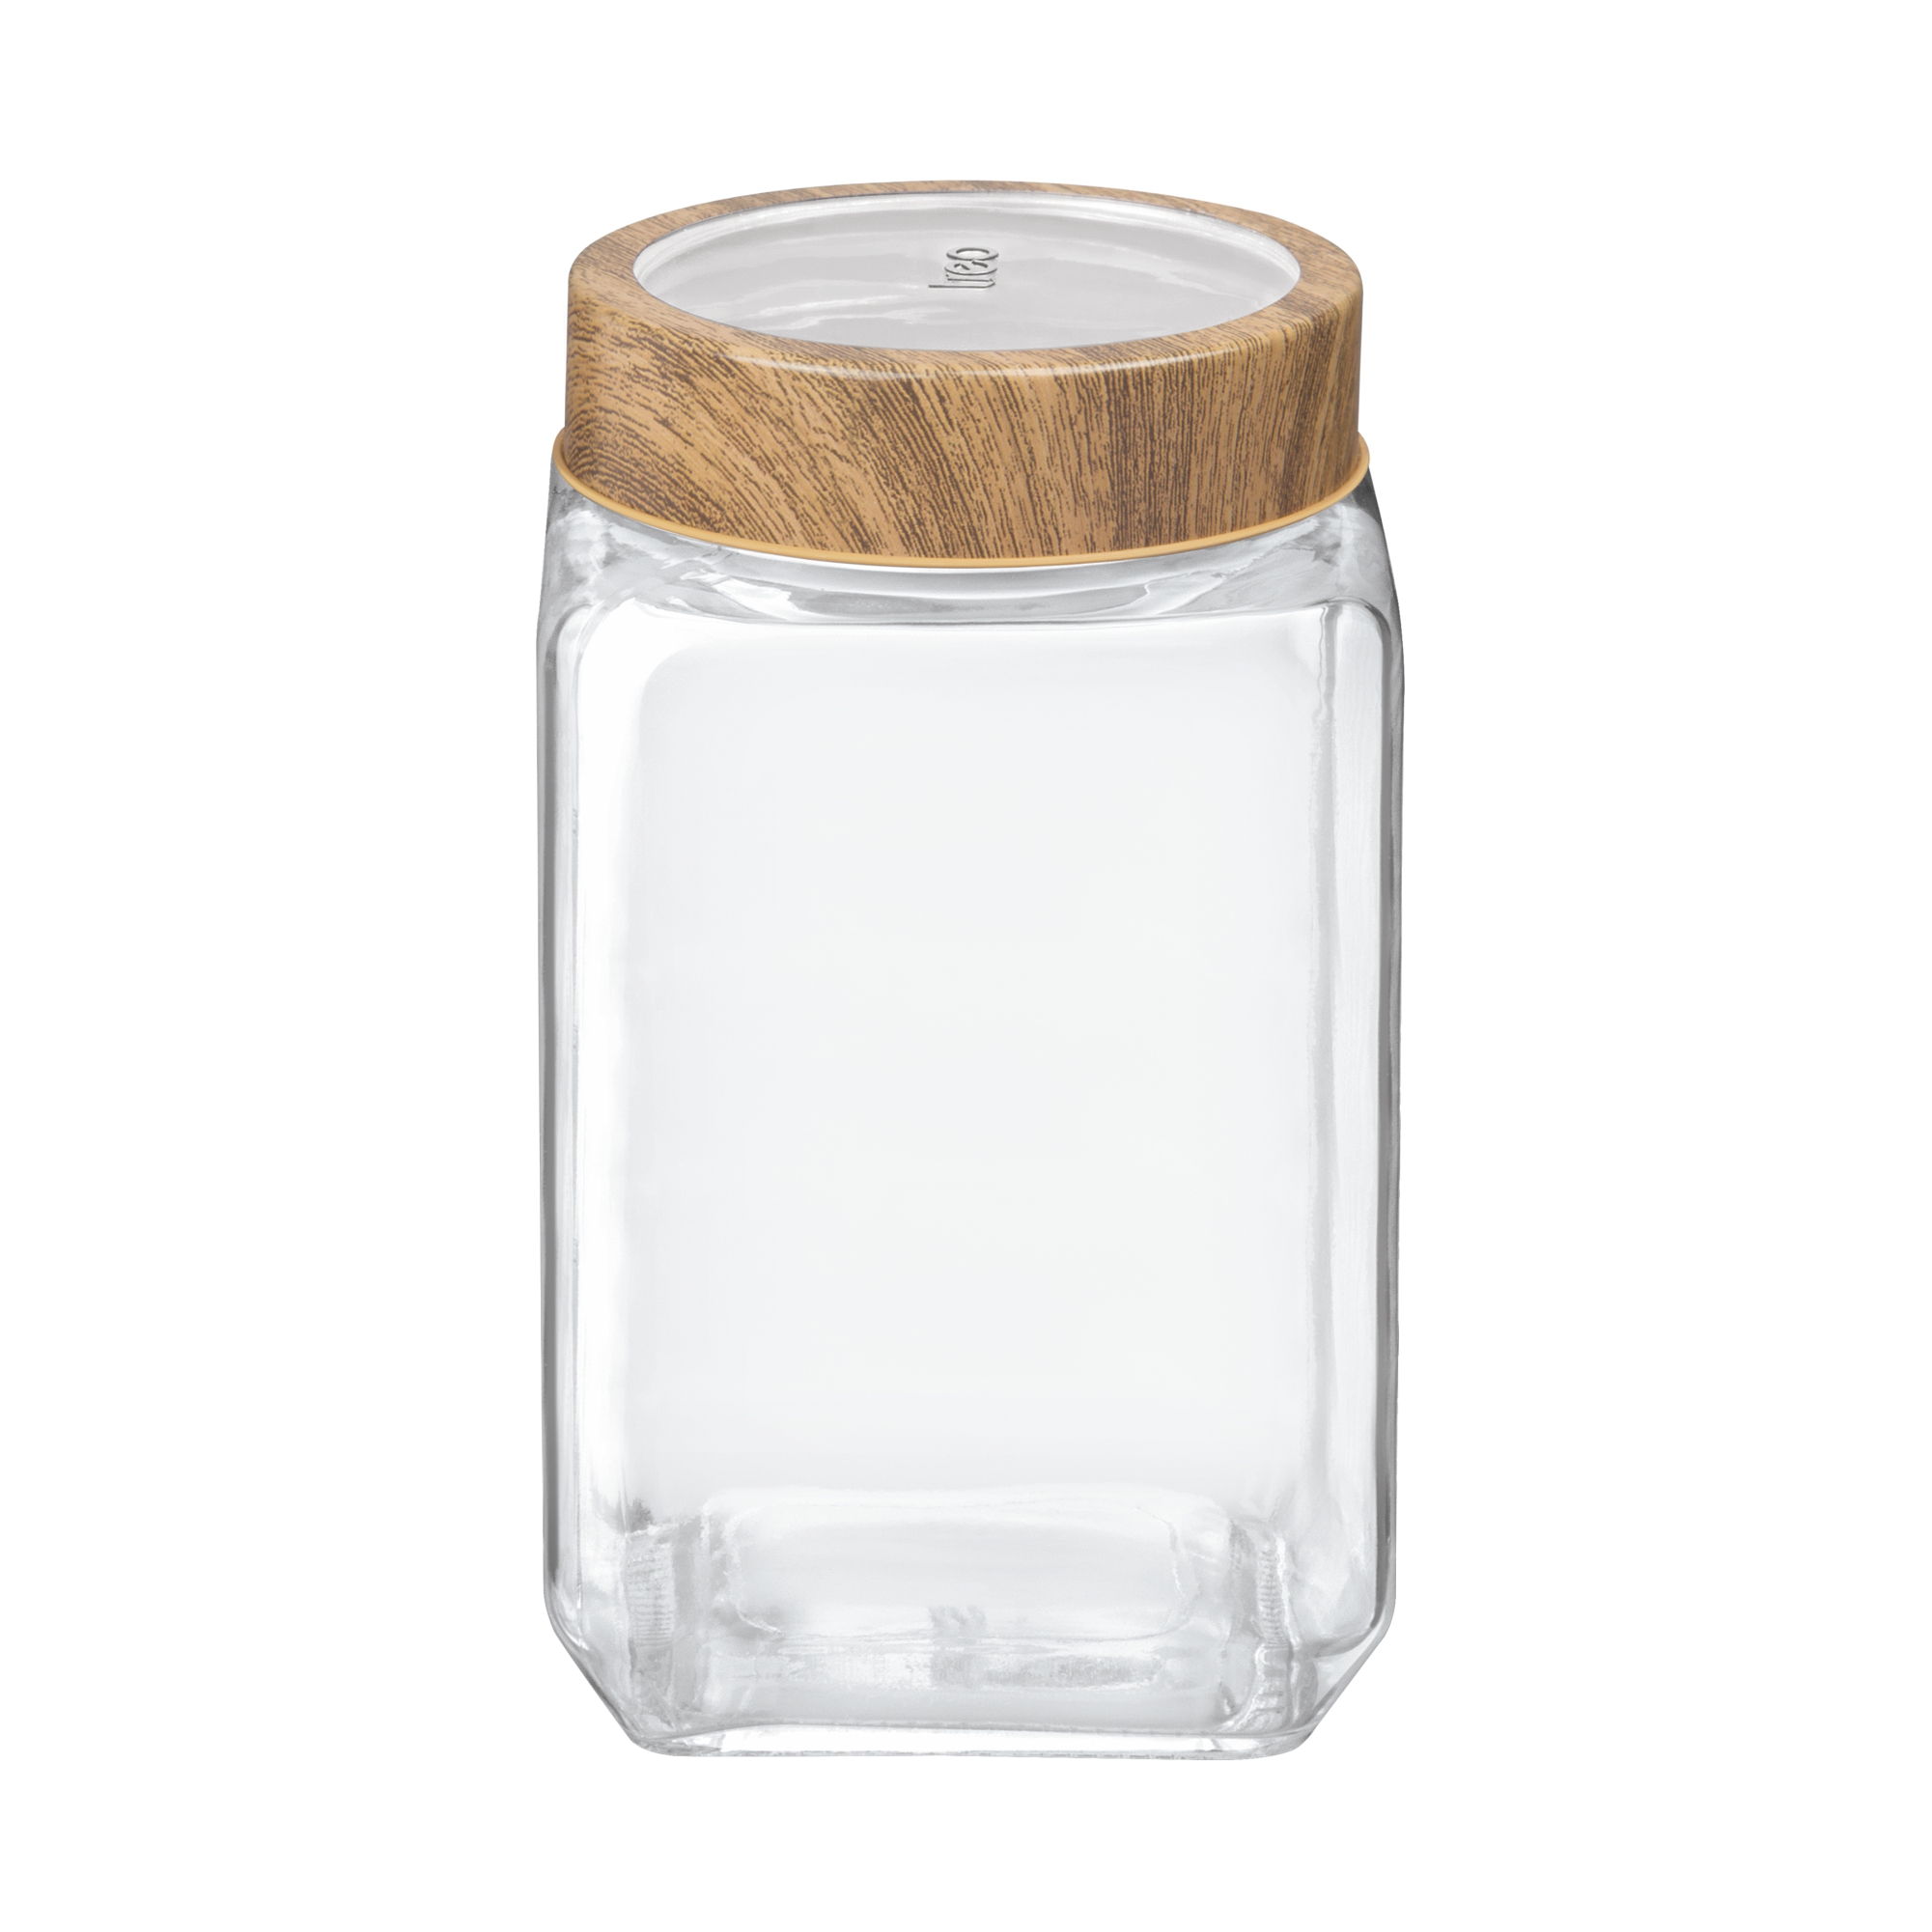 Treo Woody Cube Glass Spice Jar Set